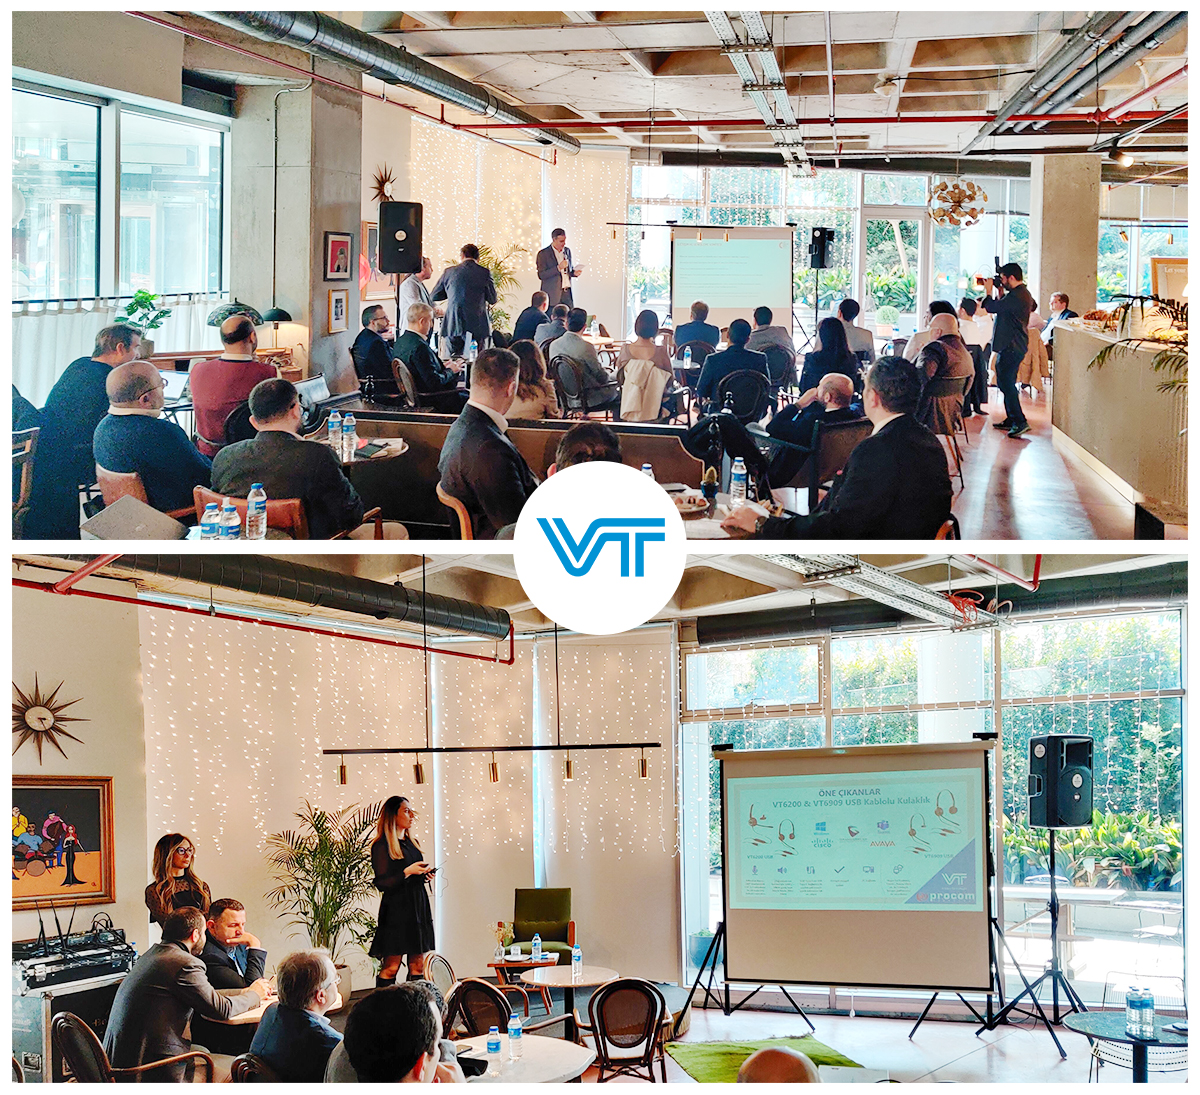 VT Turkey Distributor Procom Teknoloji successfully ran the VT Headsets presentation for CMD